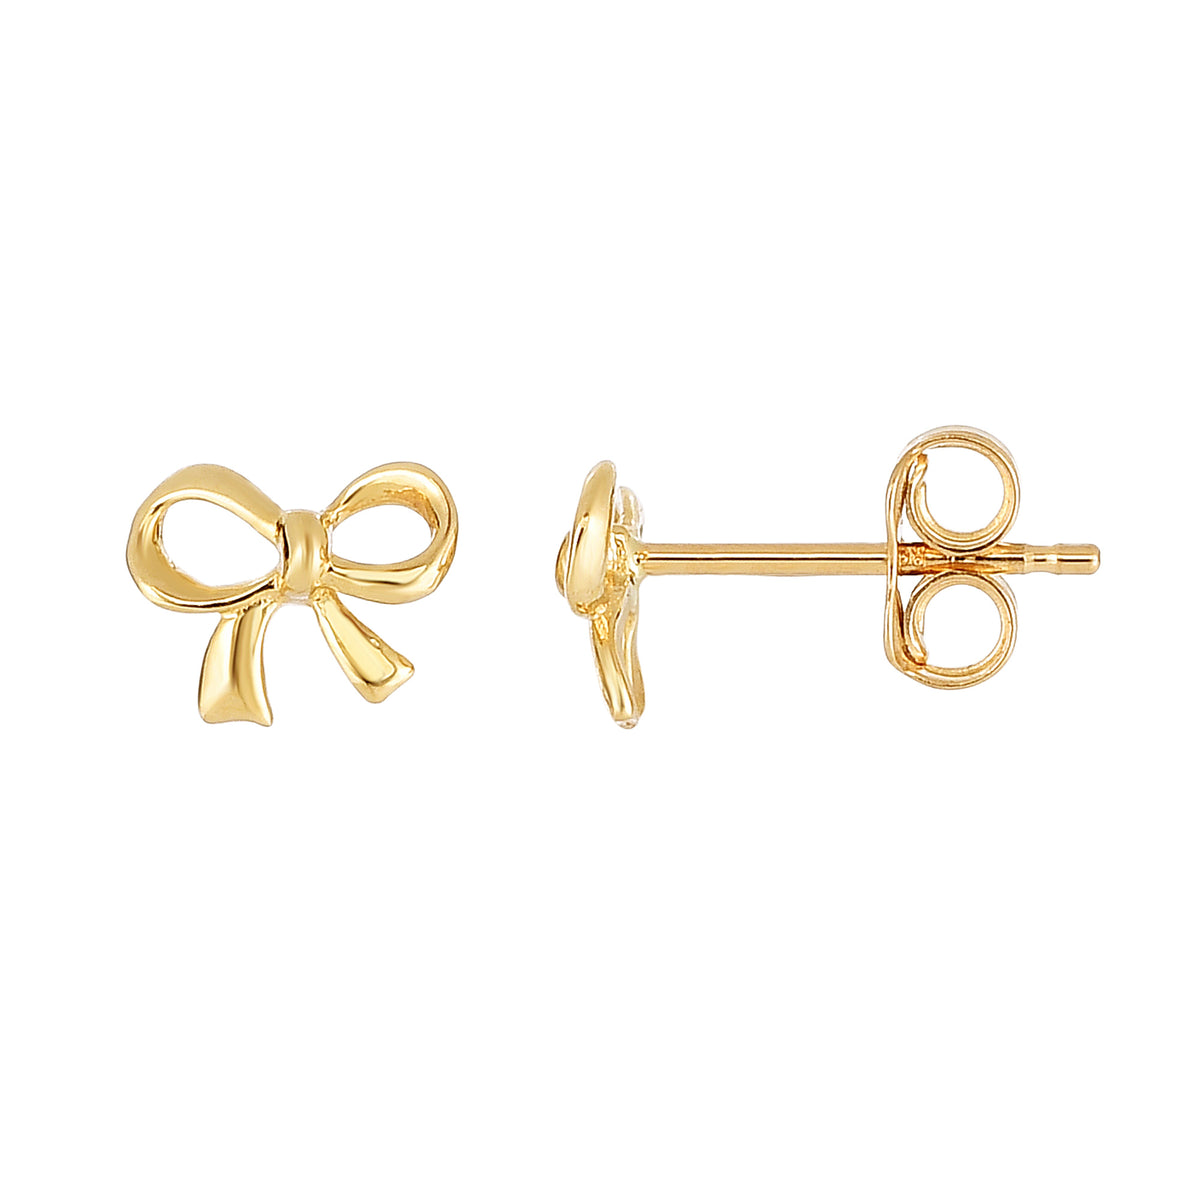 14K Yellow Gold Bow Tie Shape Stud Earrings fine designer jewelry for men and women